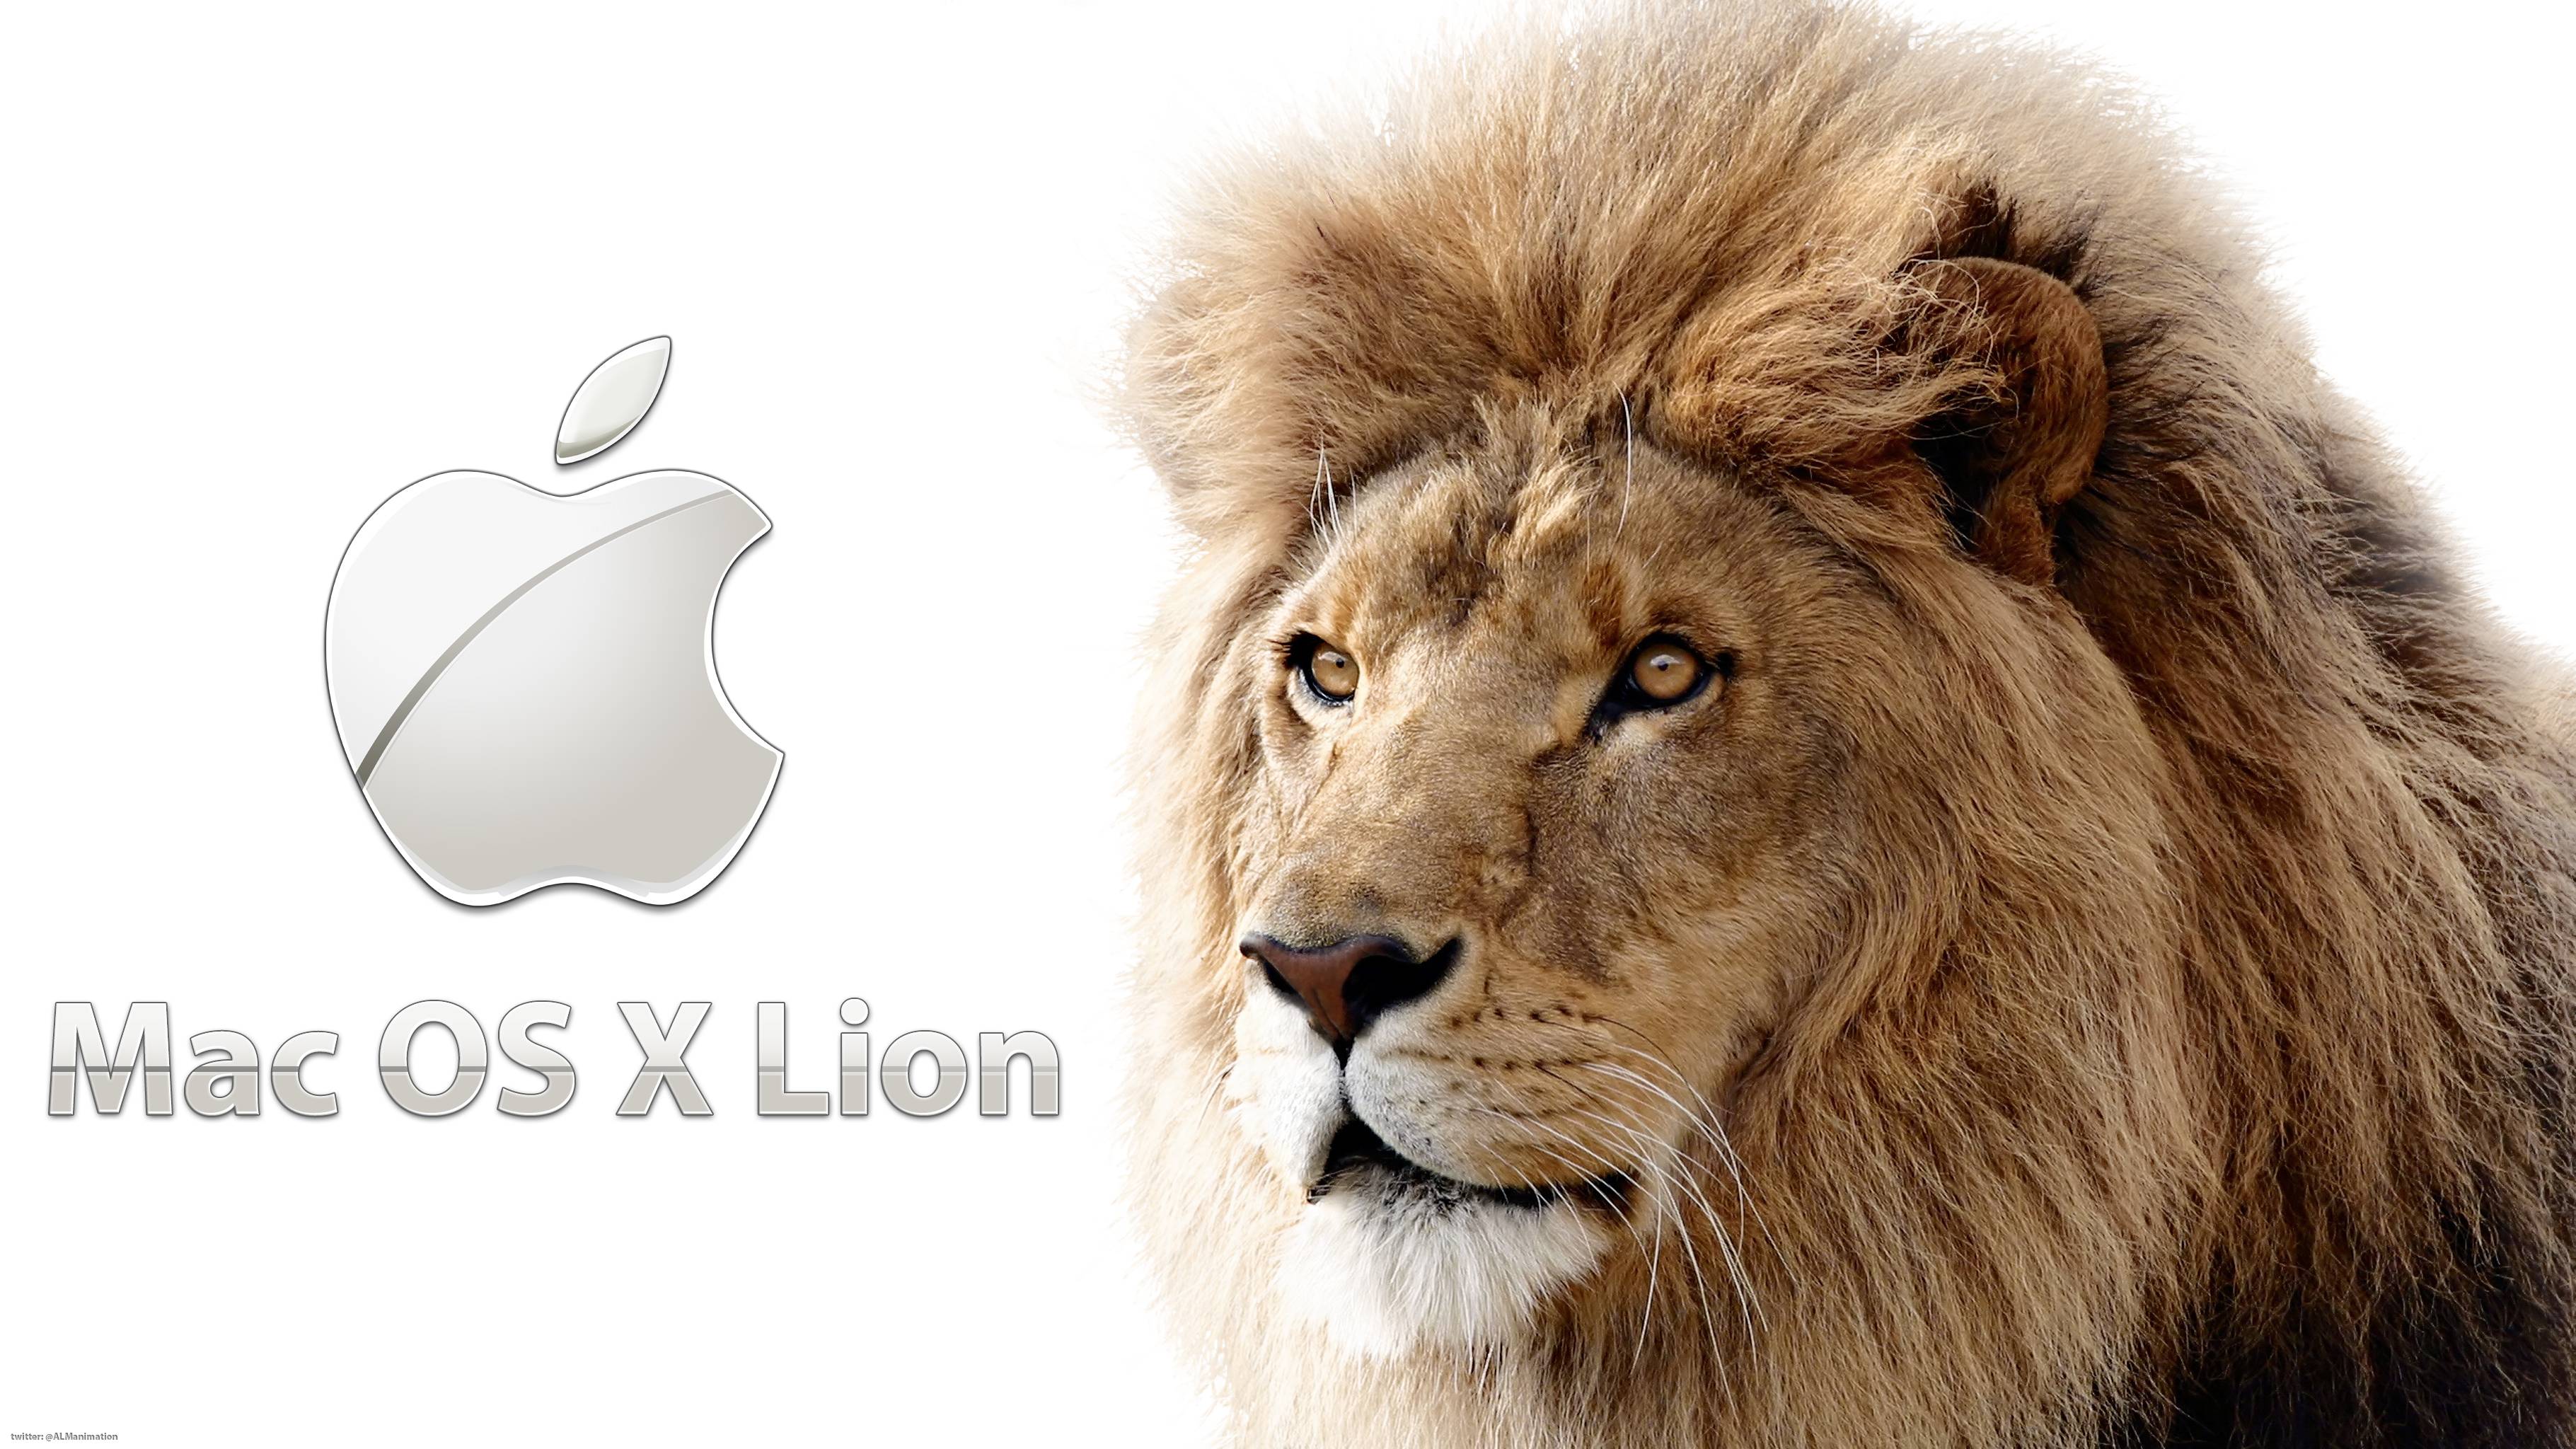 Fonds d&;écran Mac Os X Lion, tous les wallpaper Mac Os X Lion